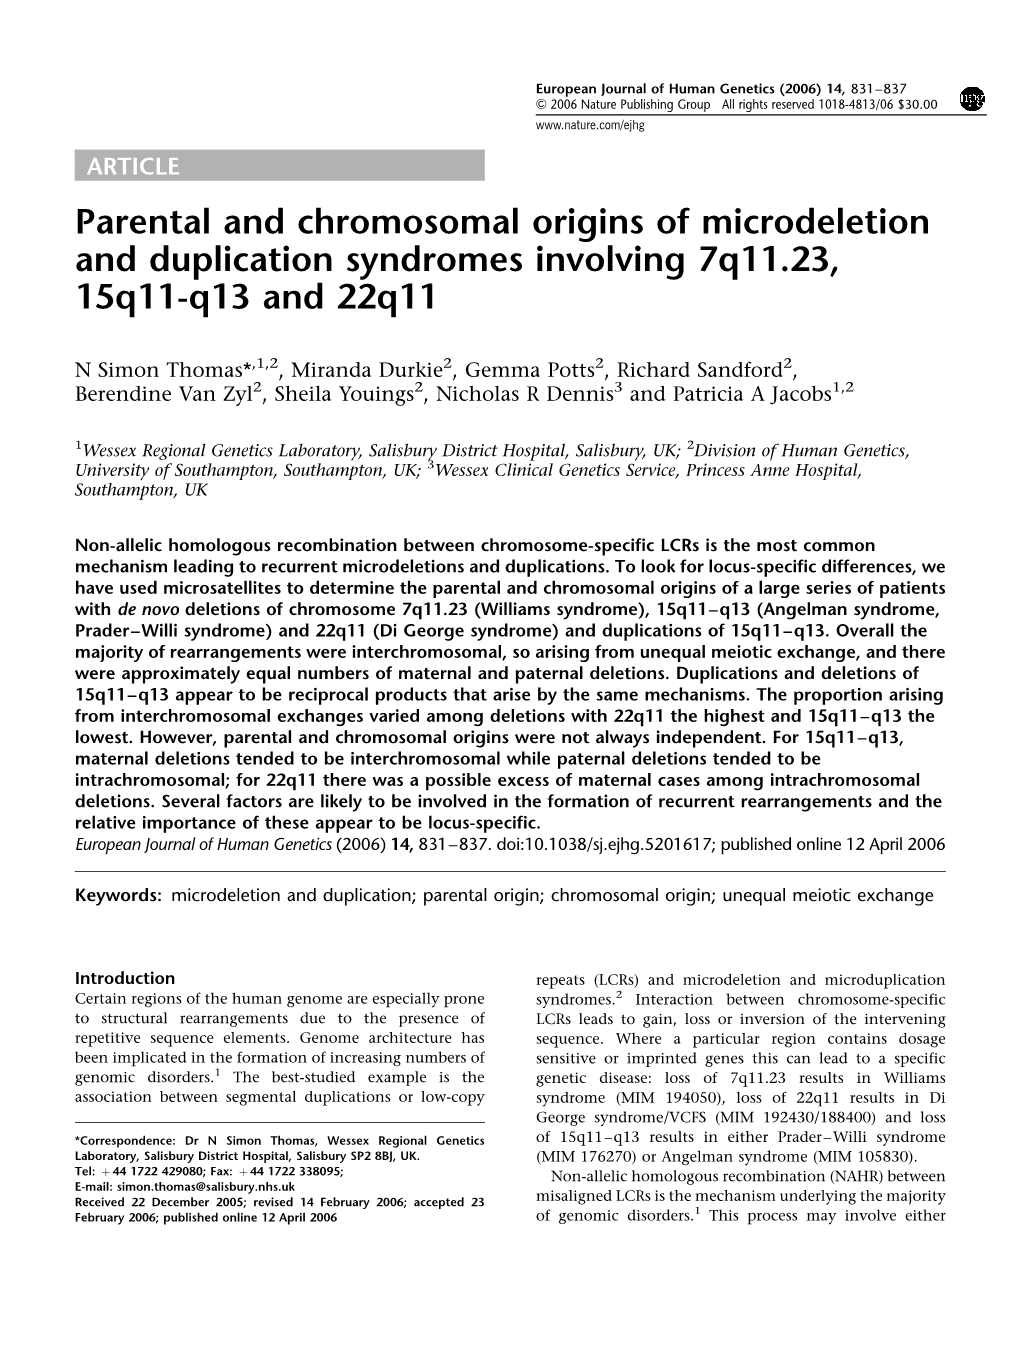 Parental and Chromosomal Origins of Microdeletion and Duplication Syndromes Involving 7Q11.23, 15Q11-Q13 and 22Q11